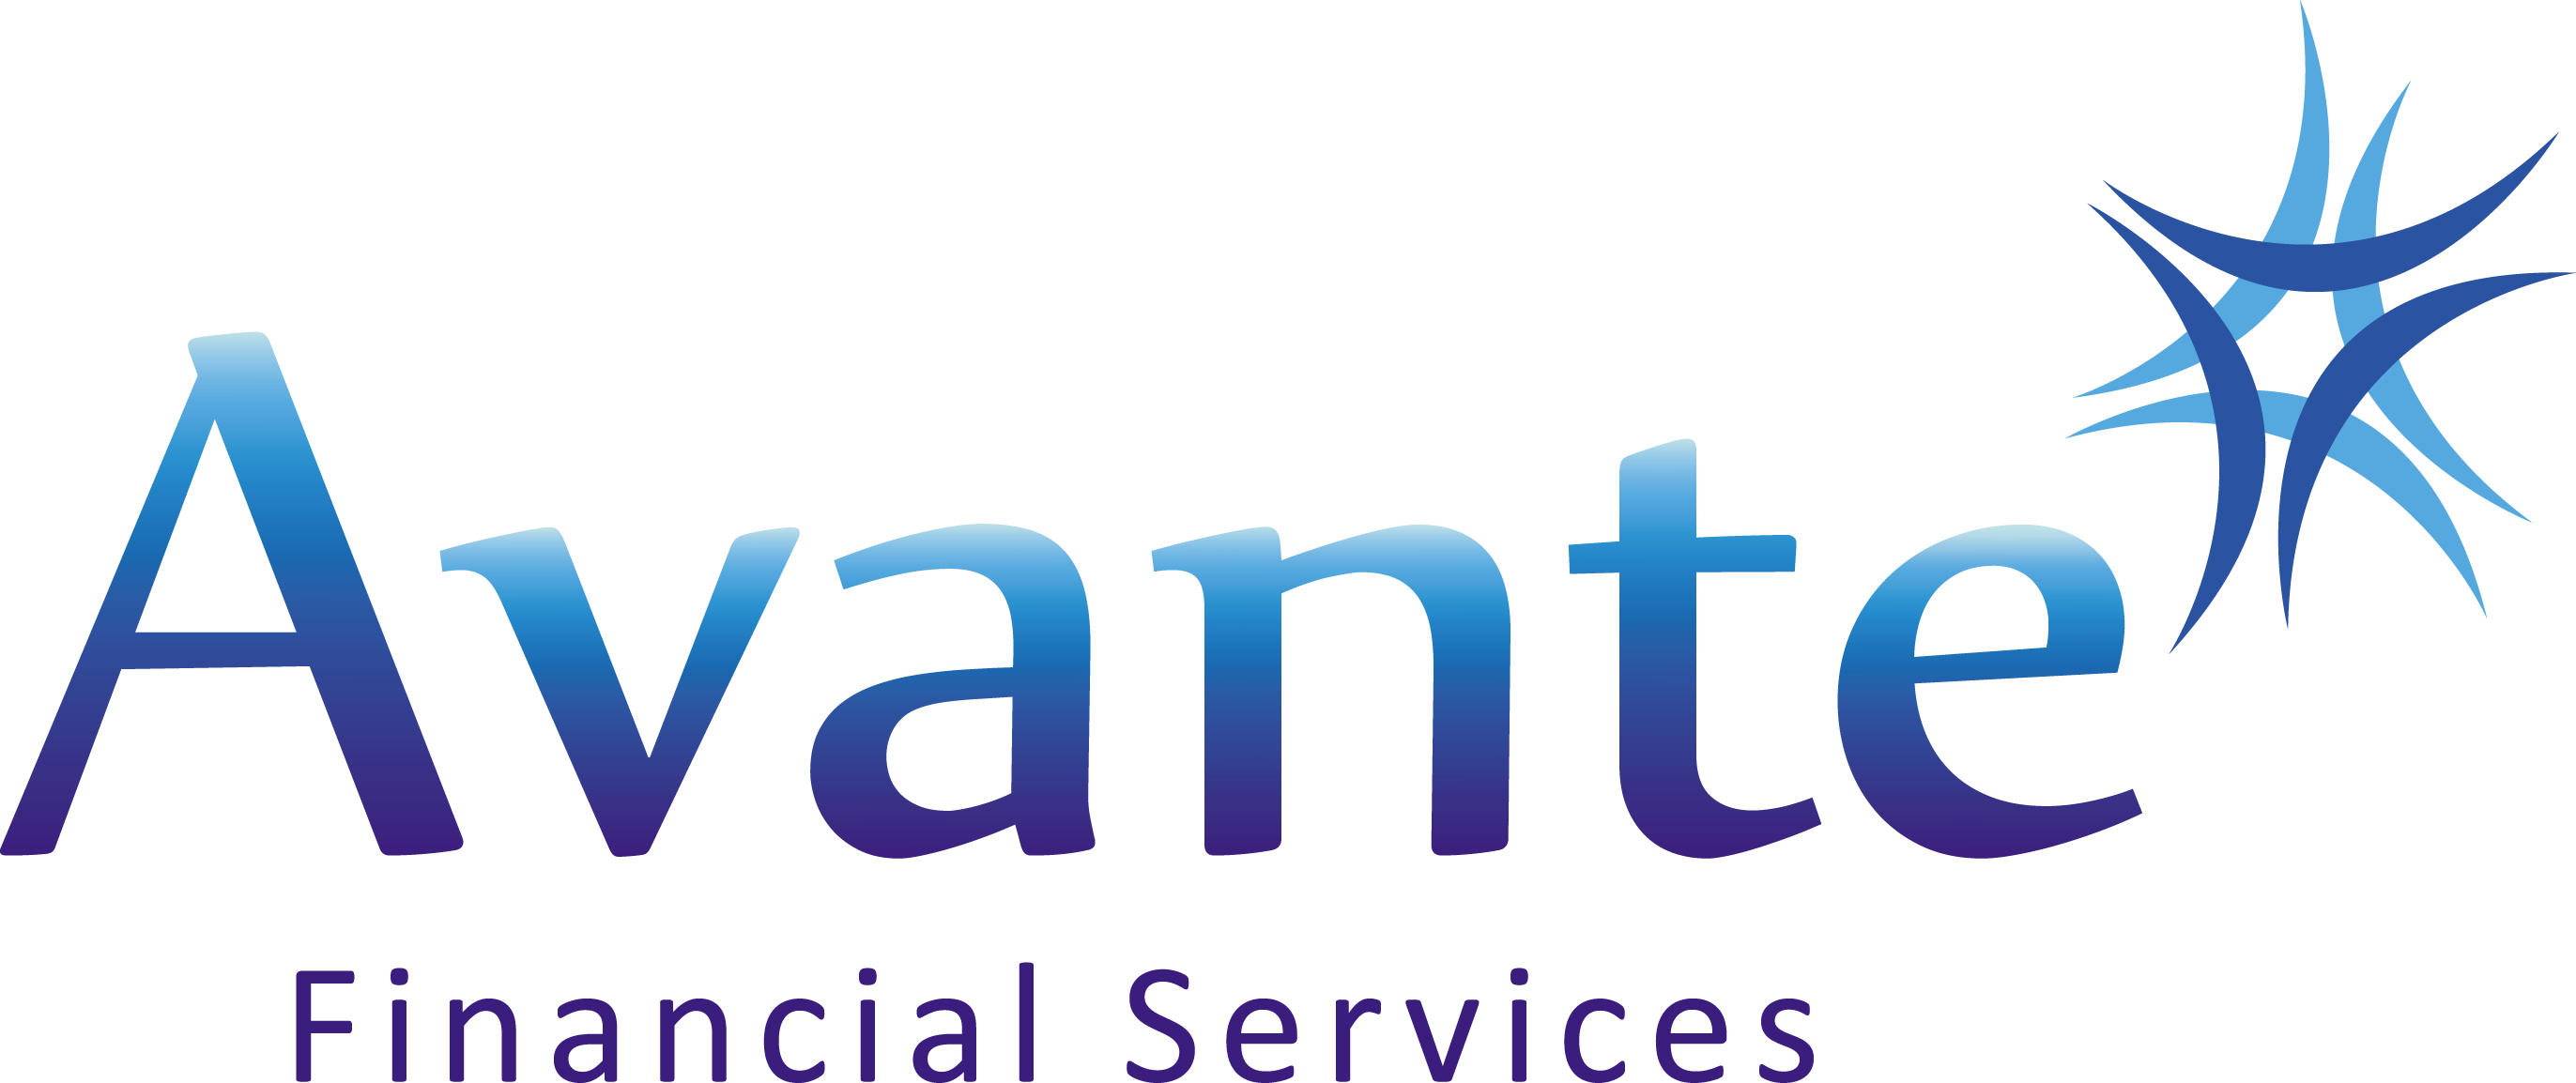 Avante Financial Services